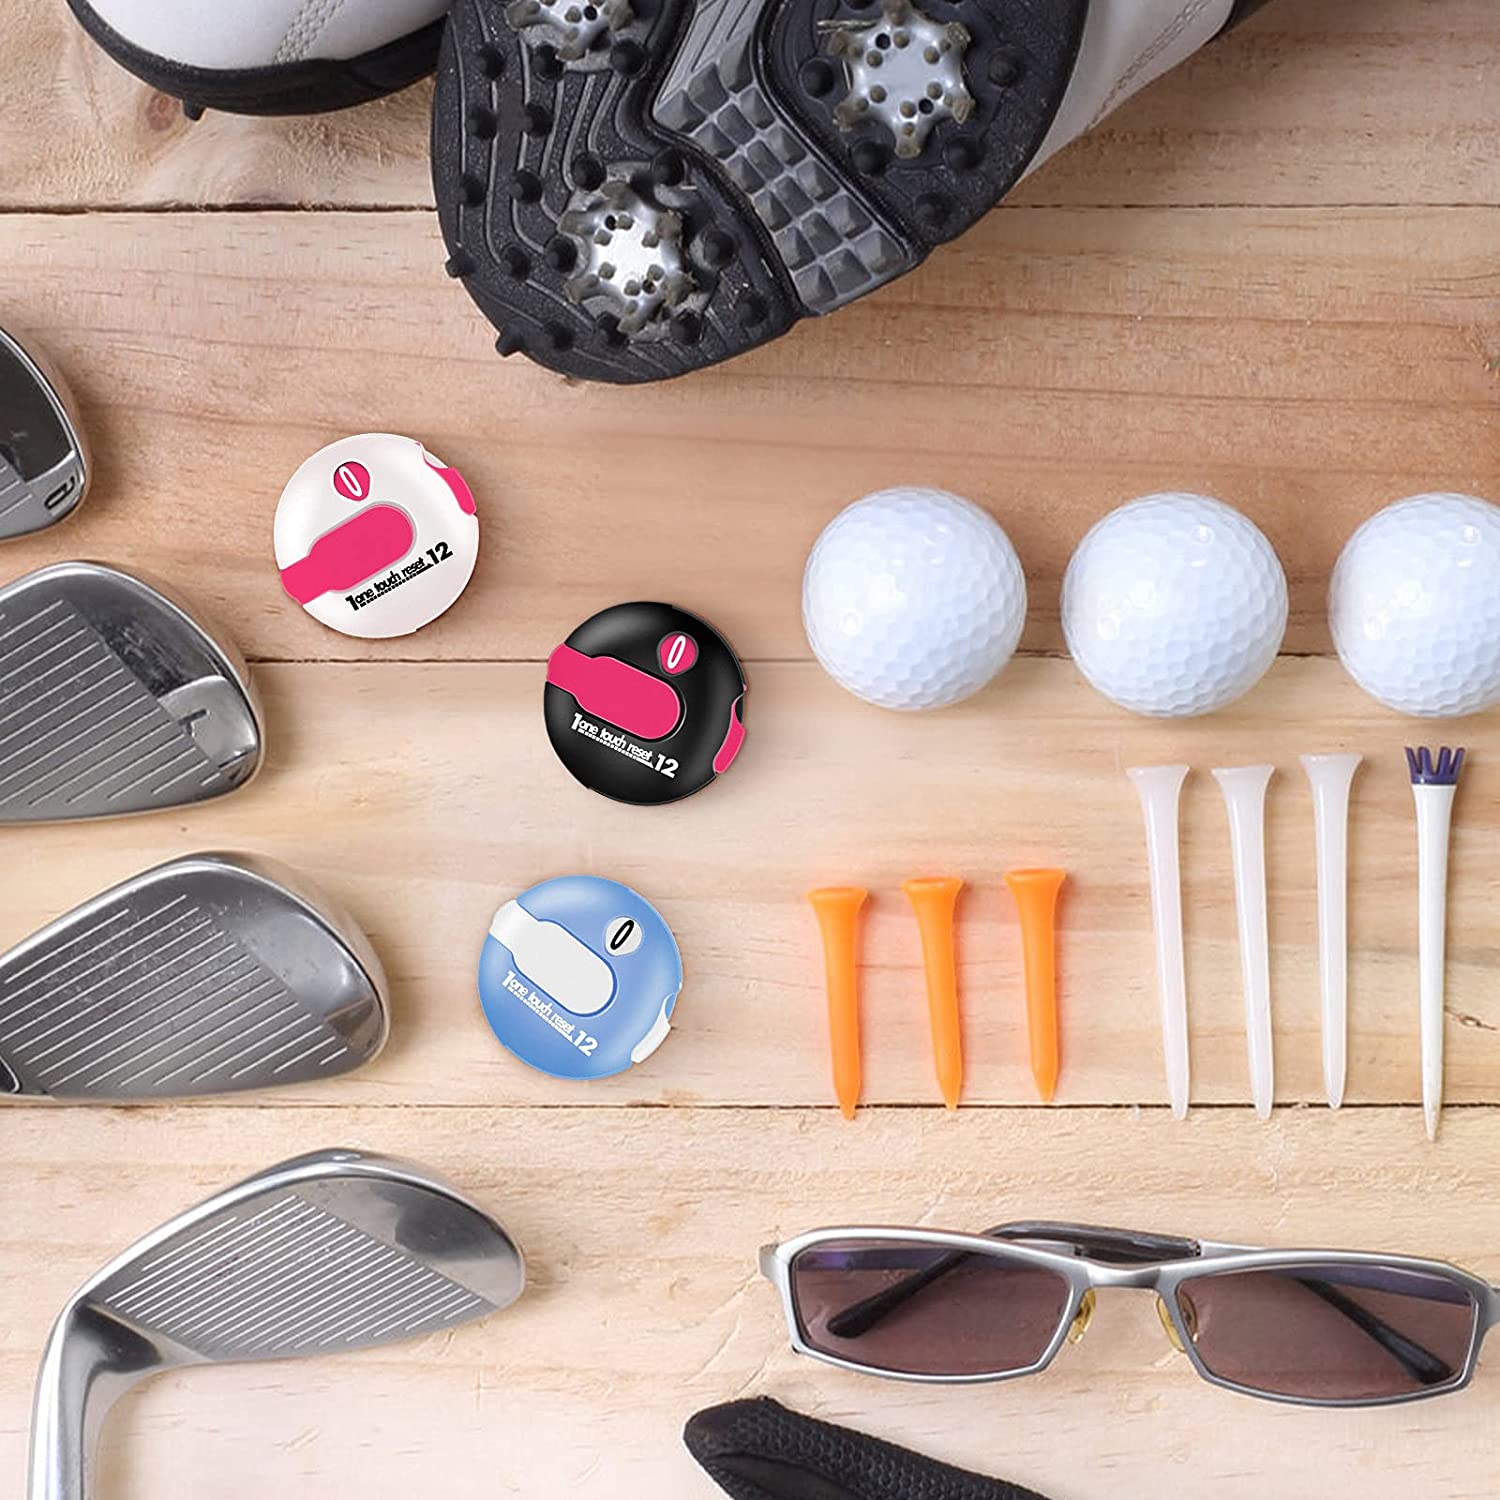 Golf Score Clickers - NEW Bright Color 3 Pieces Golf Stroke Counter